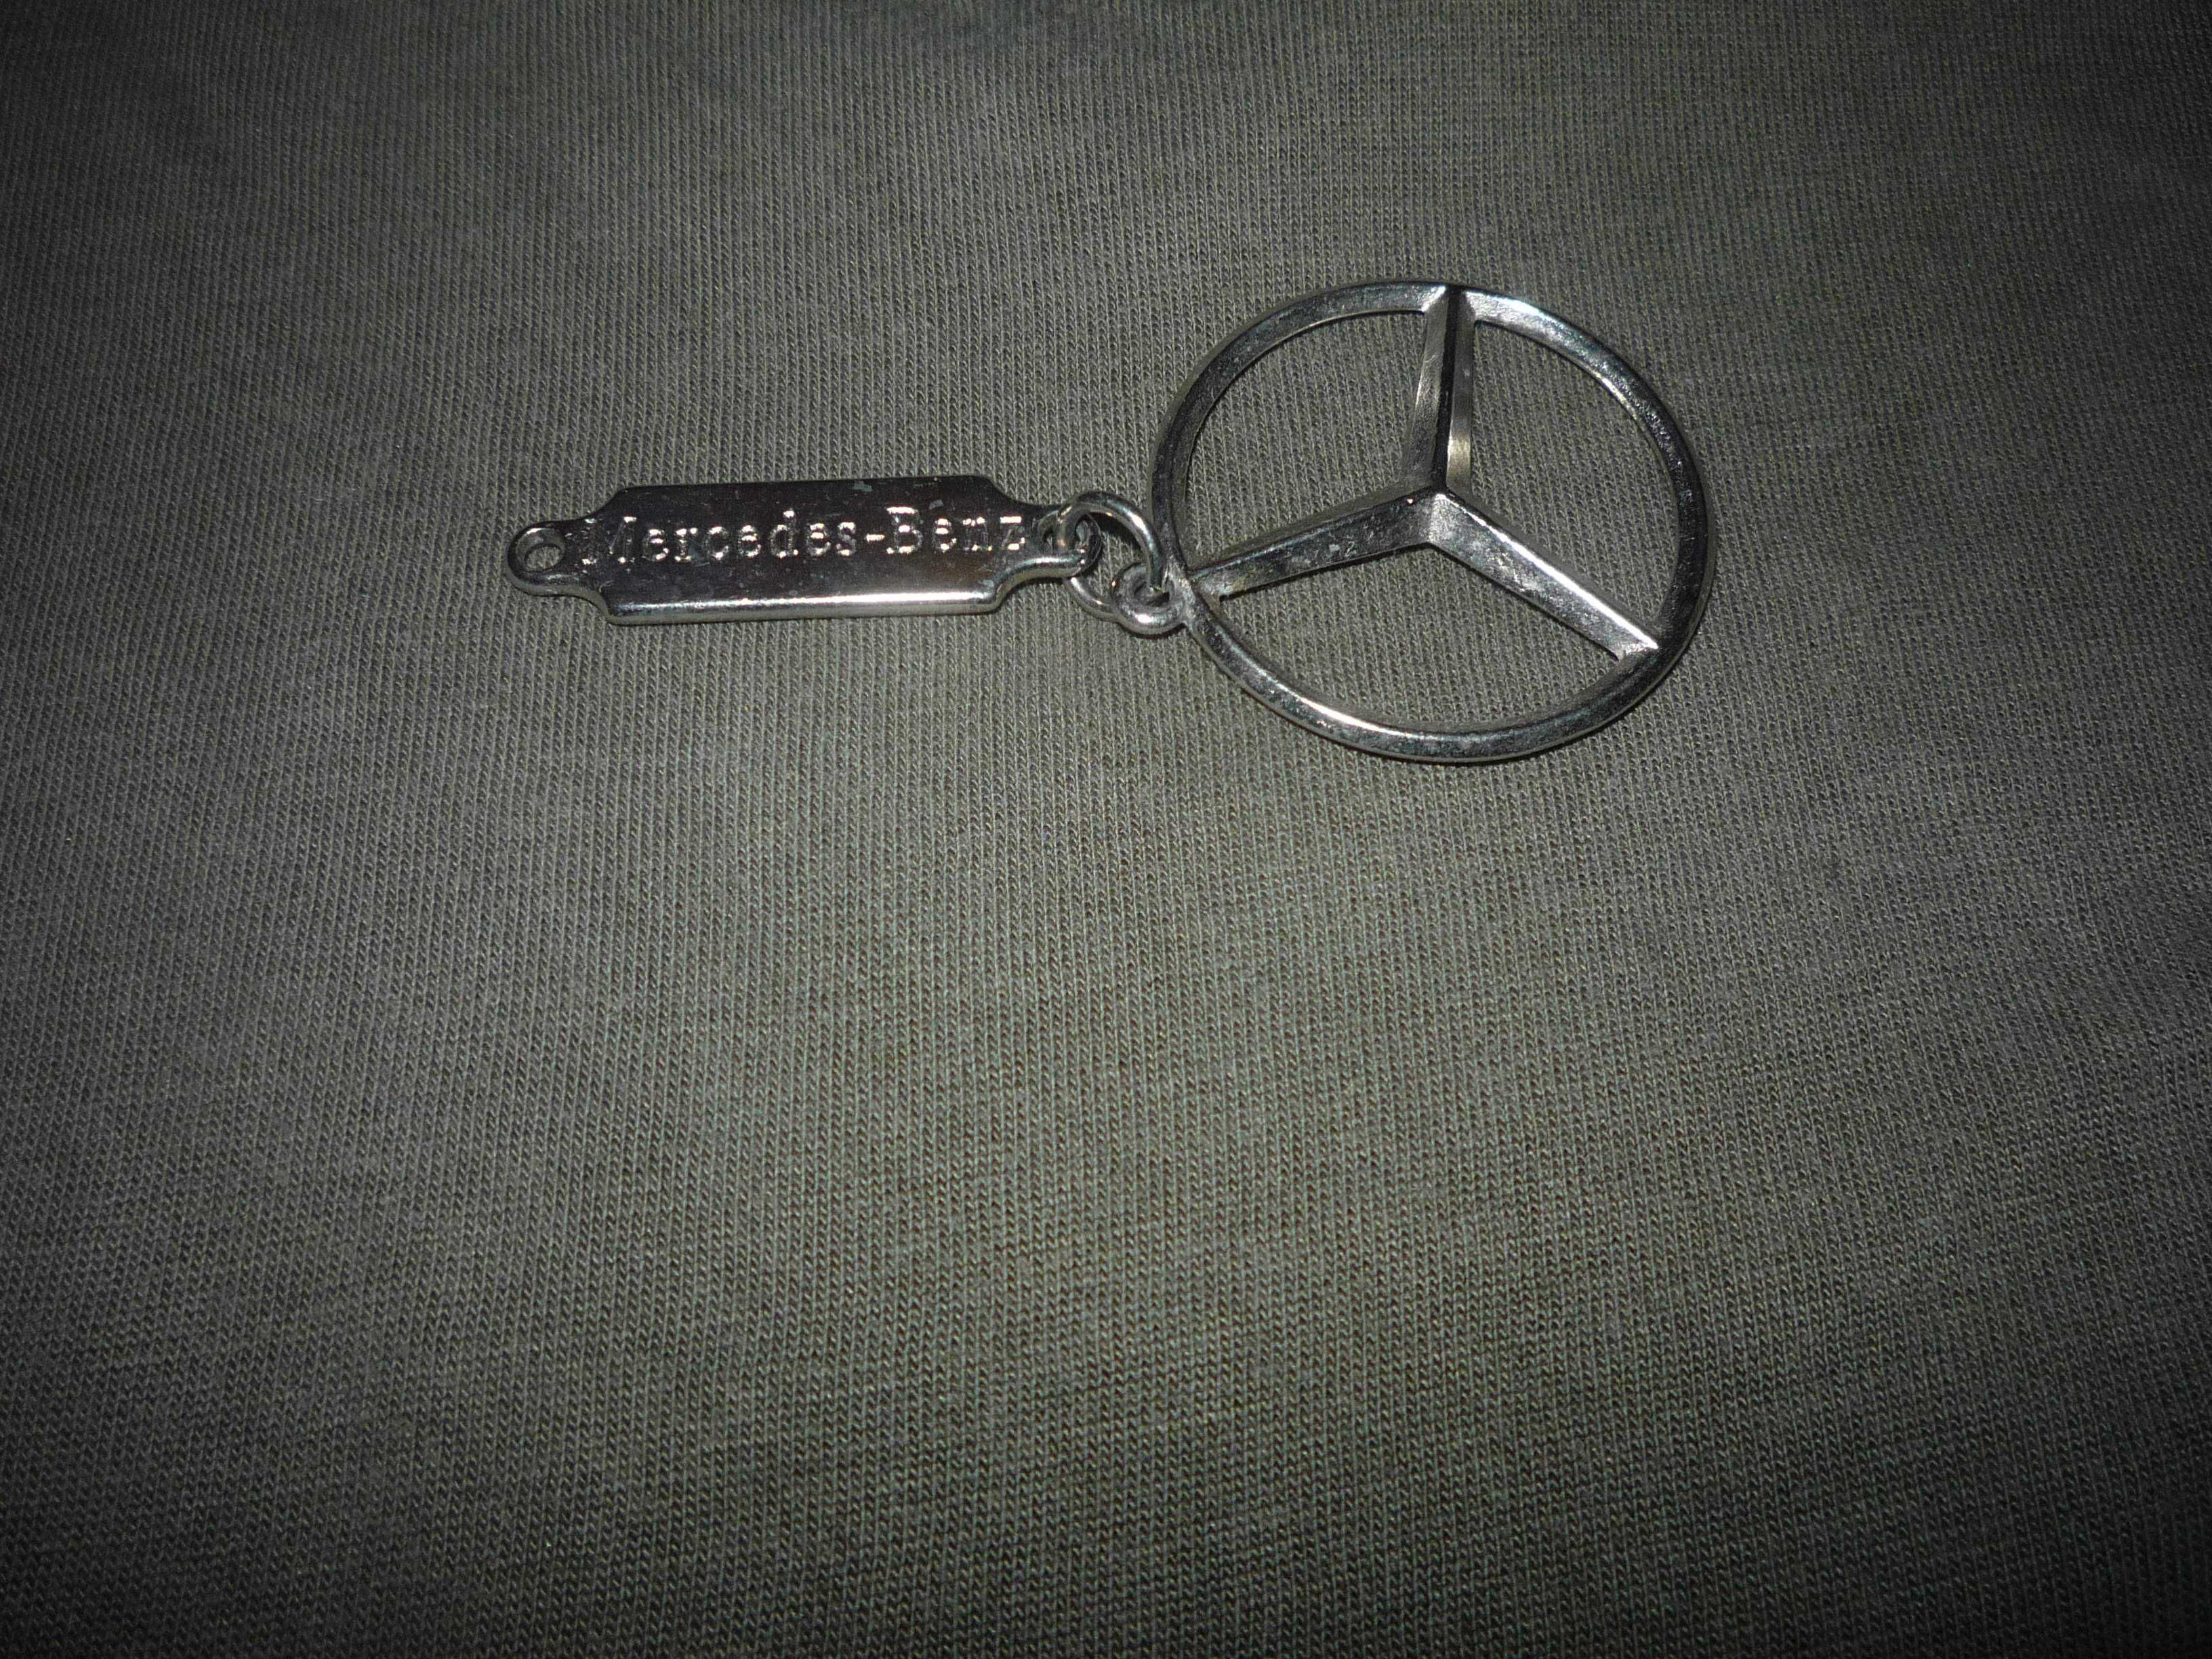 Porta-chaves Mercedes inox: 1 euro